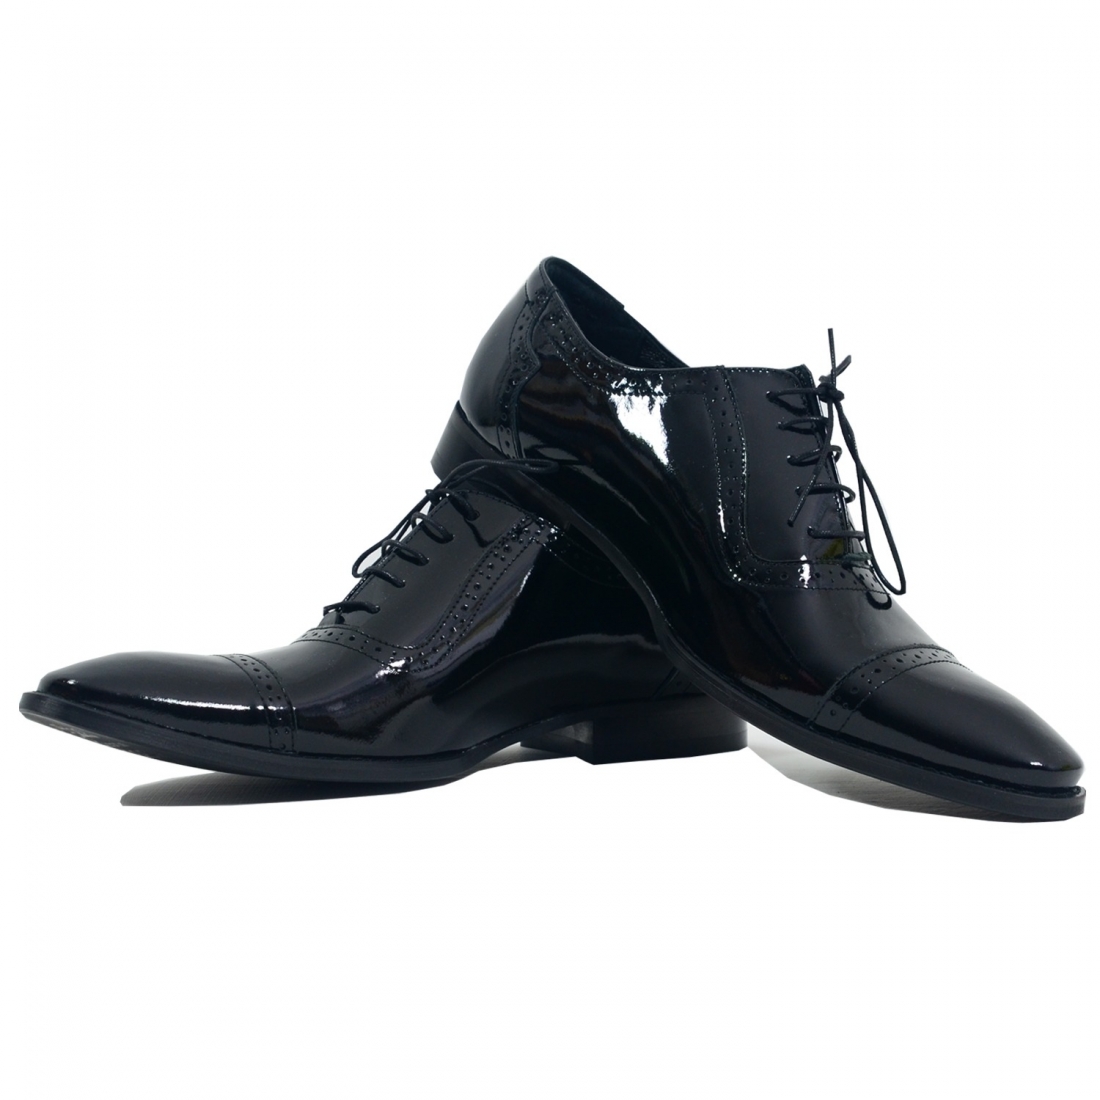 Modello Atmoe - Buty Klasyczne - Handmade Colorful Italian Leather Shoes